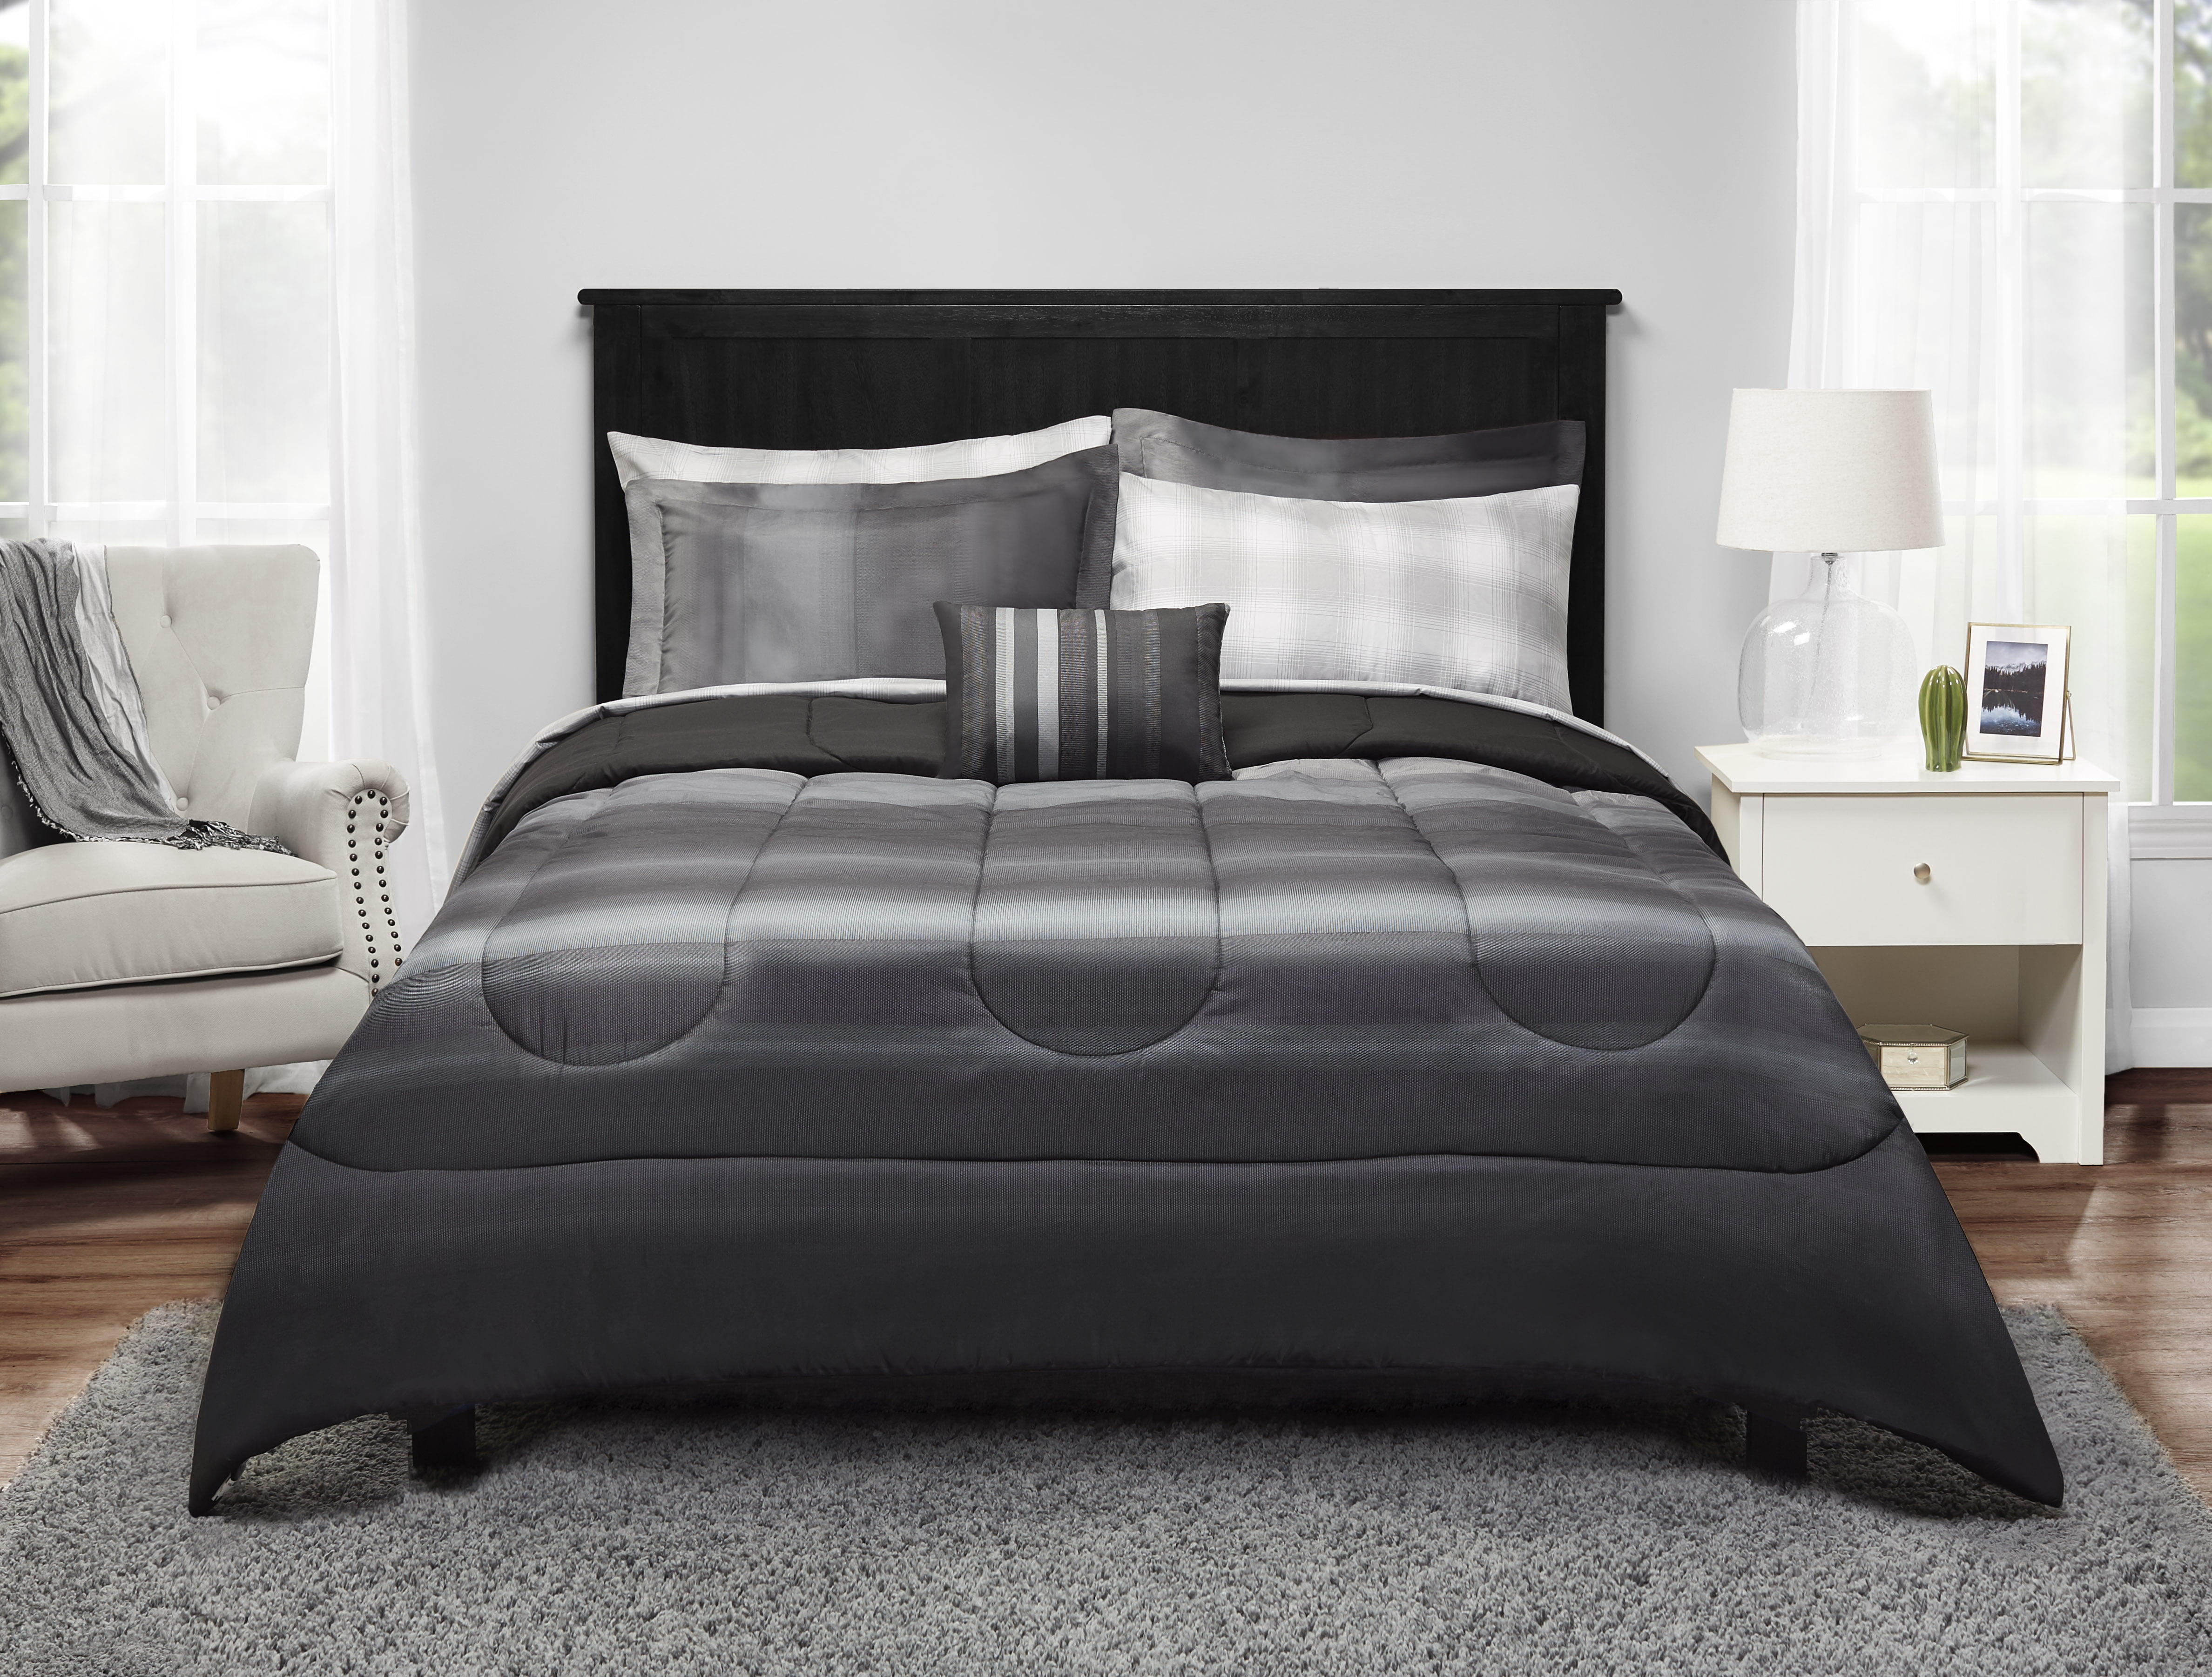 Grey Bedding Twin : Cute Twin Comforter Set Xl Size Dorm Room Bed ...